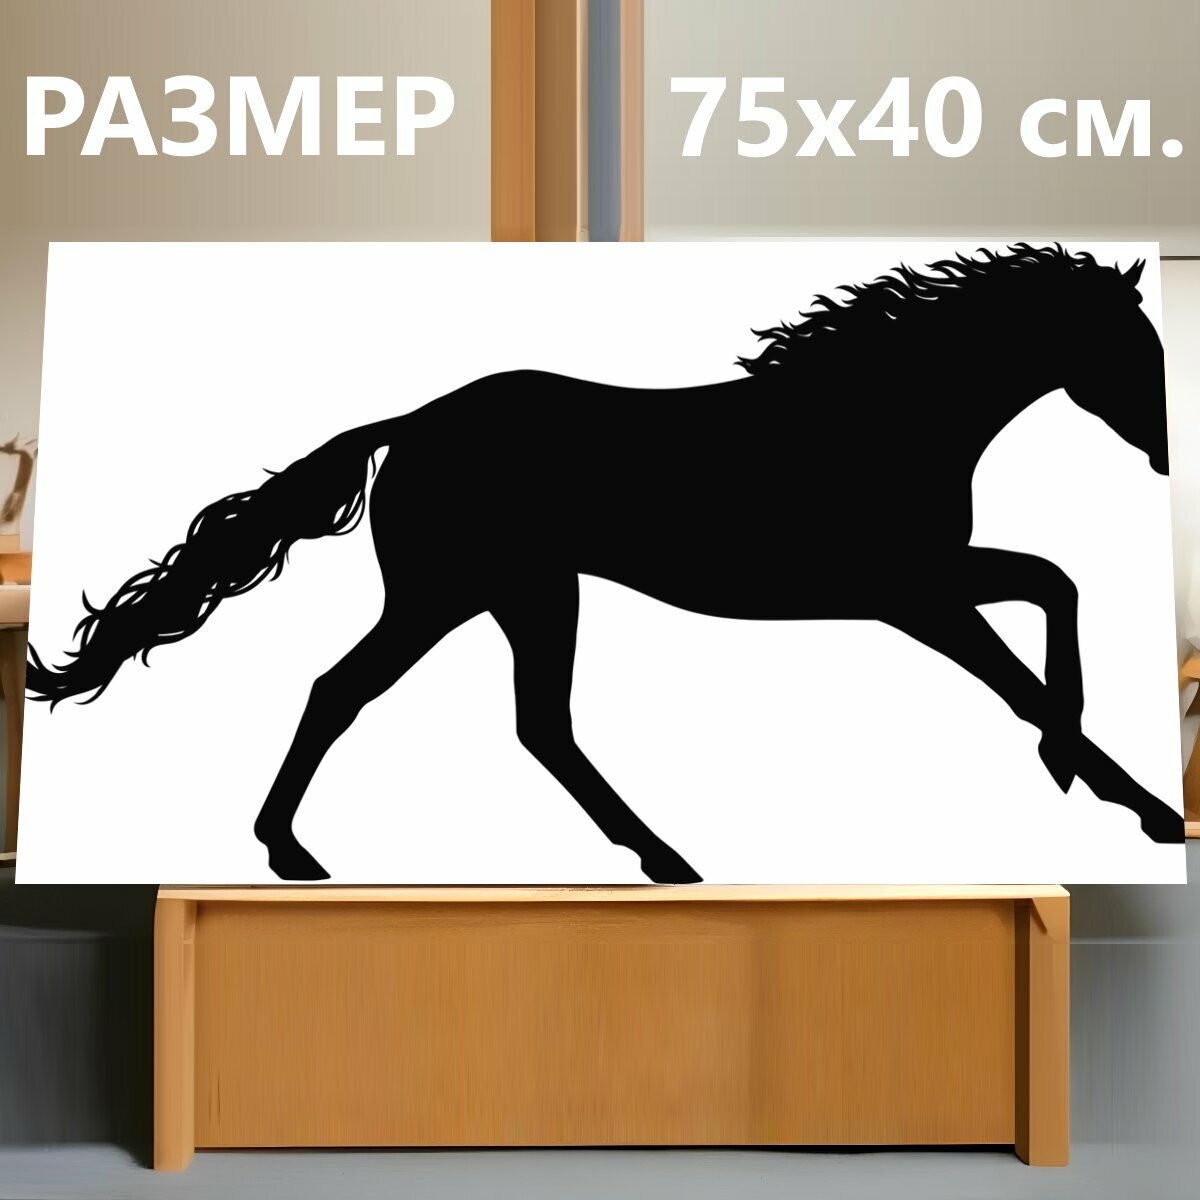 Картина на холсте "Лошадь, галопом, жеребец" на подрамнике 75х40 см. для интерьера